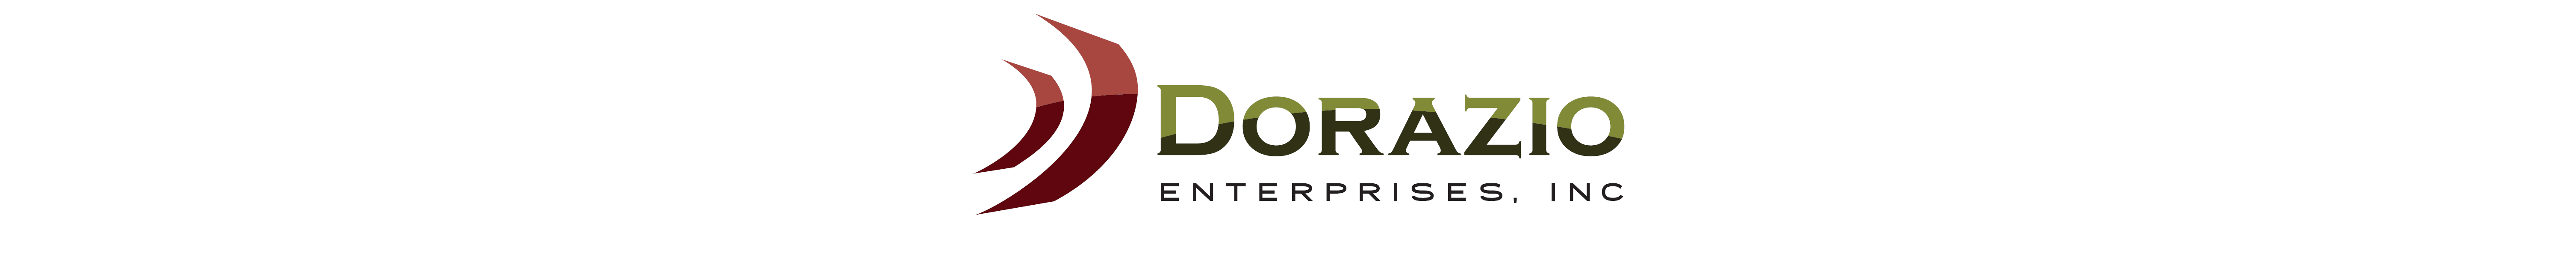 Logo for Dorazio Enterprises, Inc.